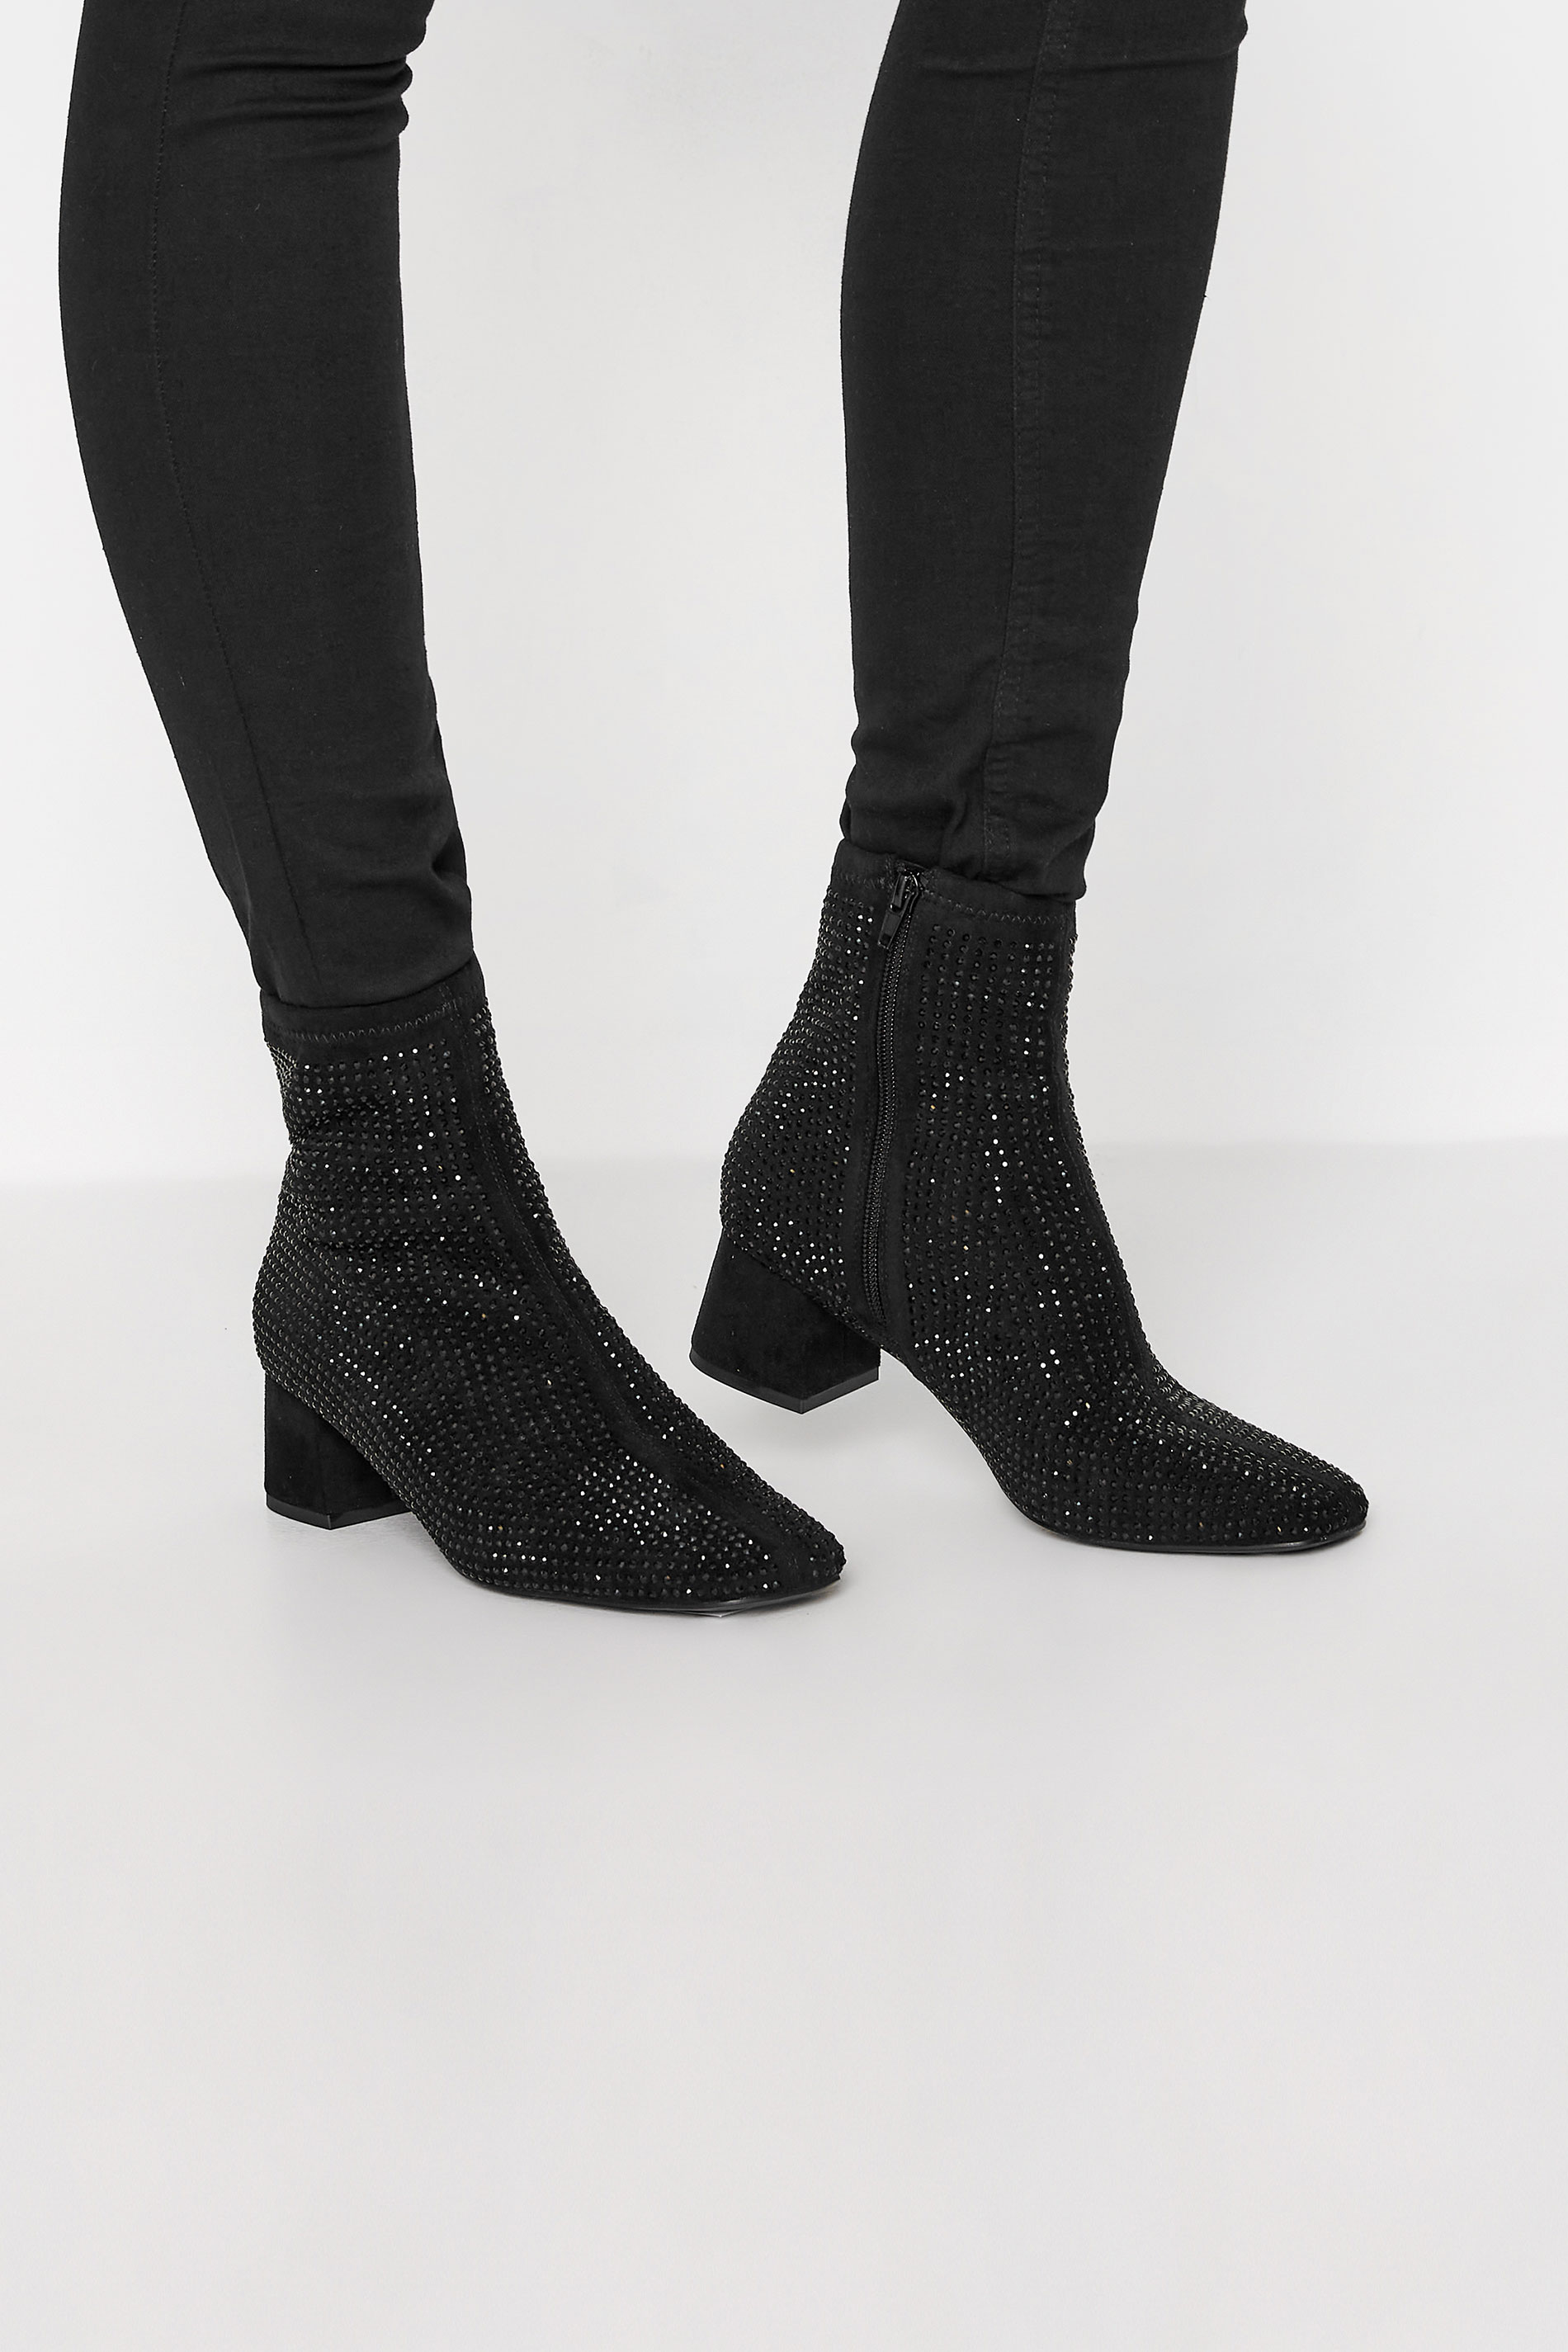 LTS Black Diamante Block Heel Boots In Standard D Fit 1